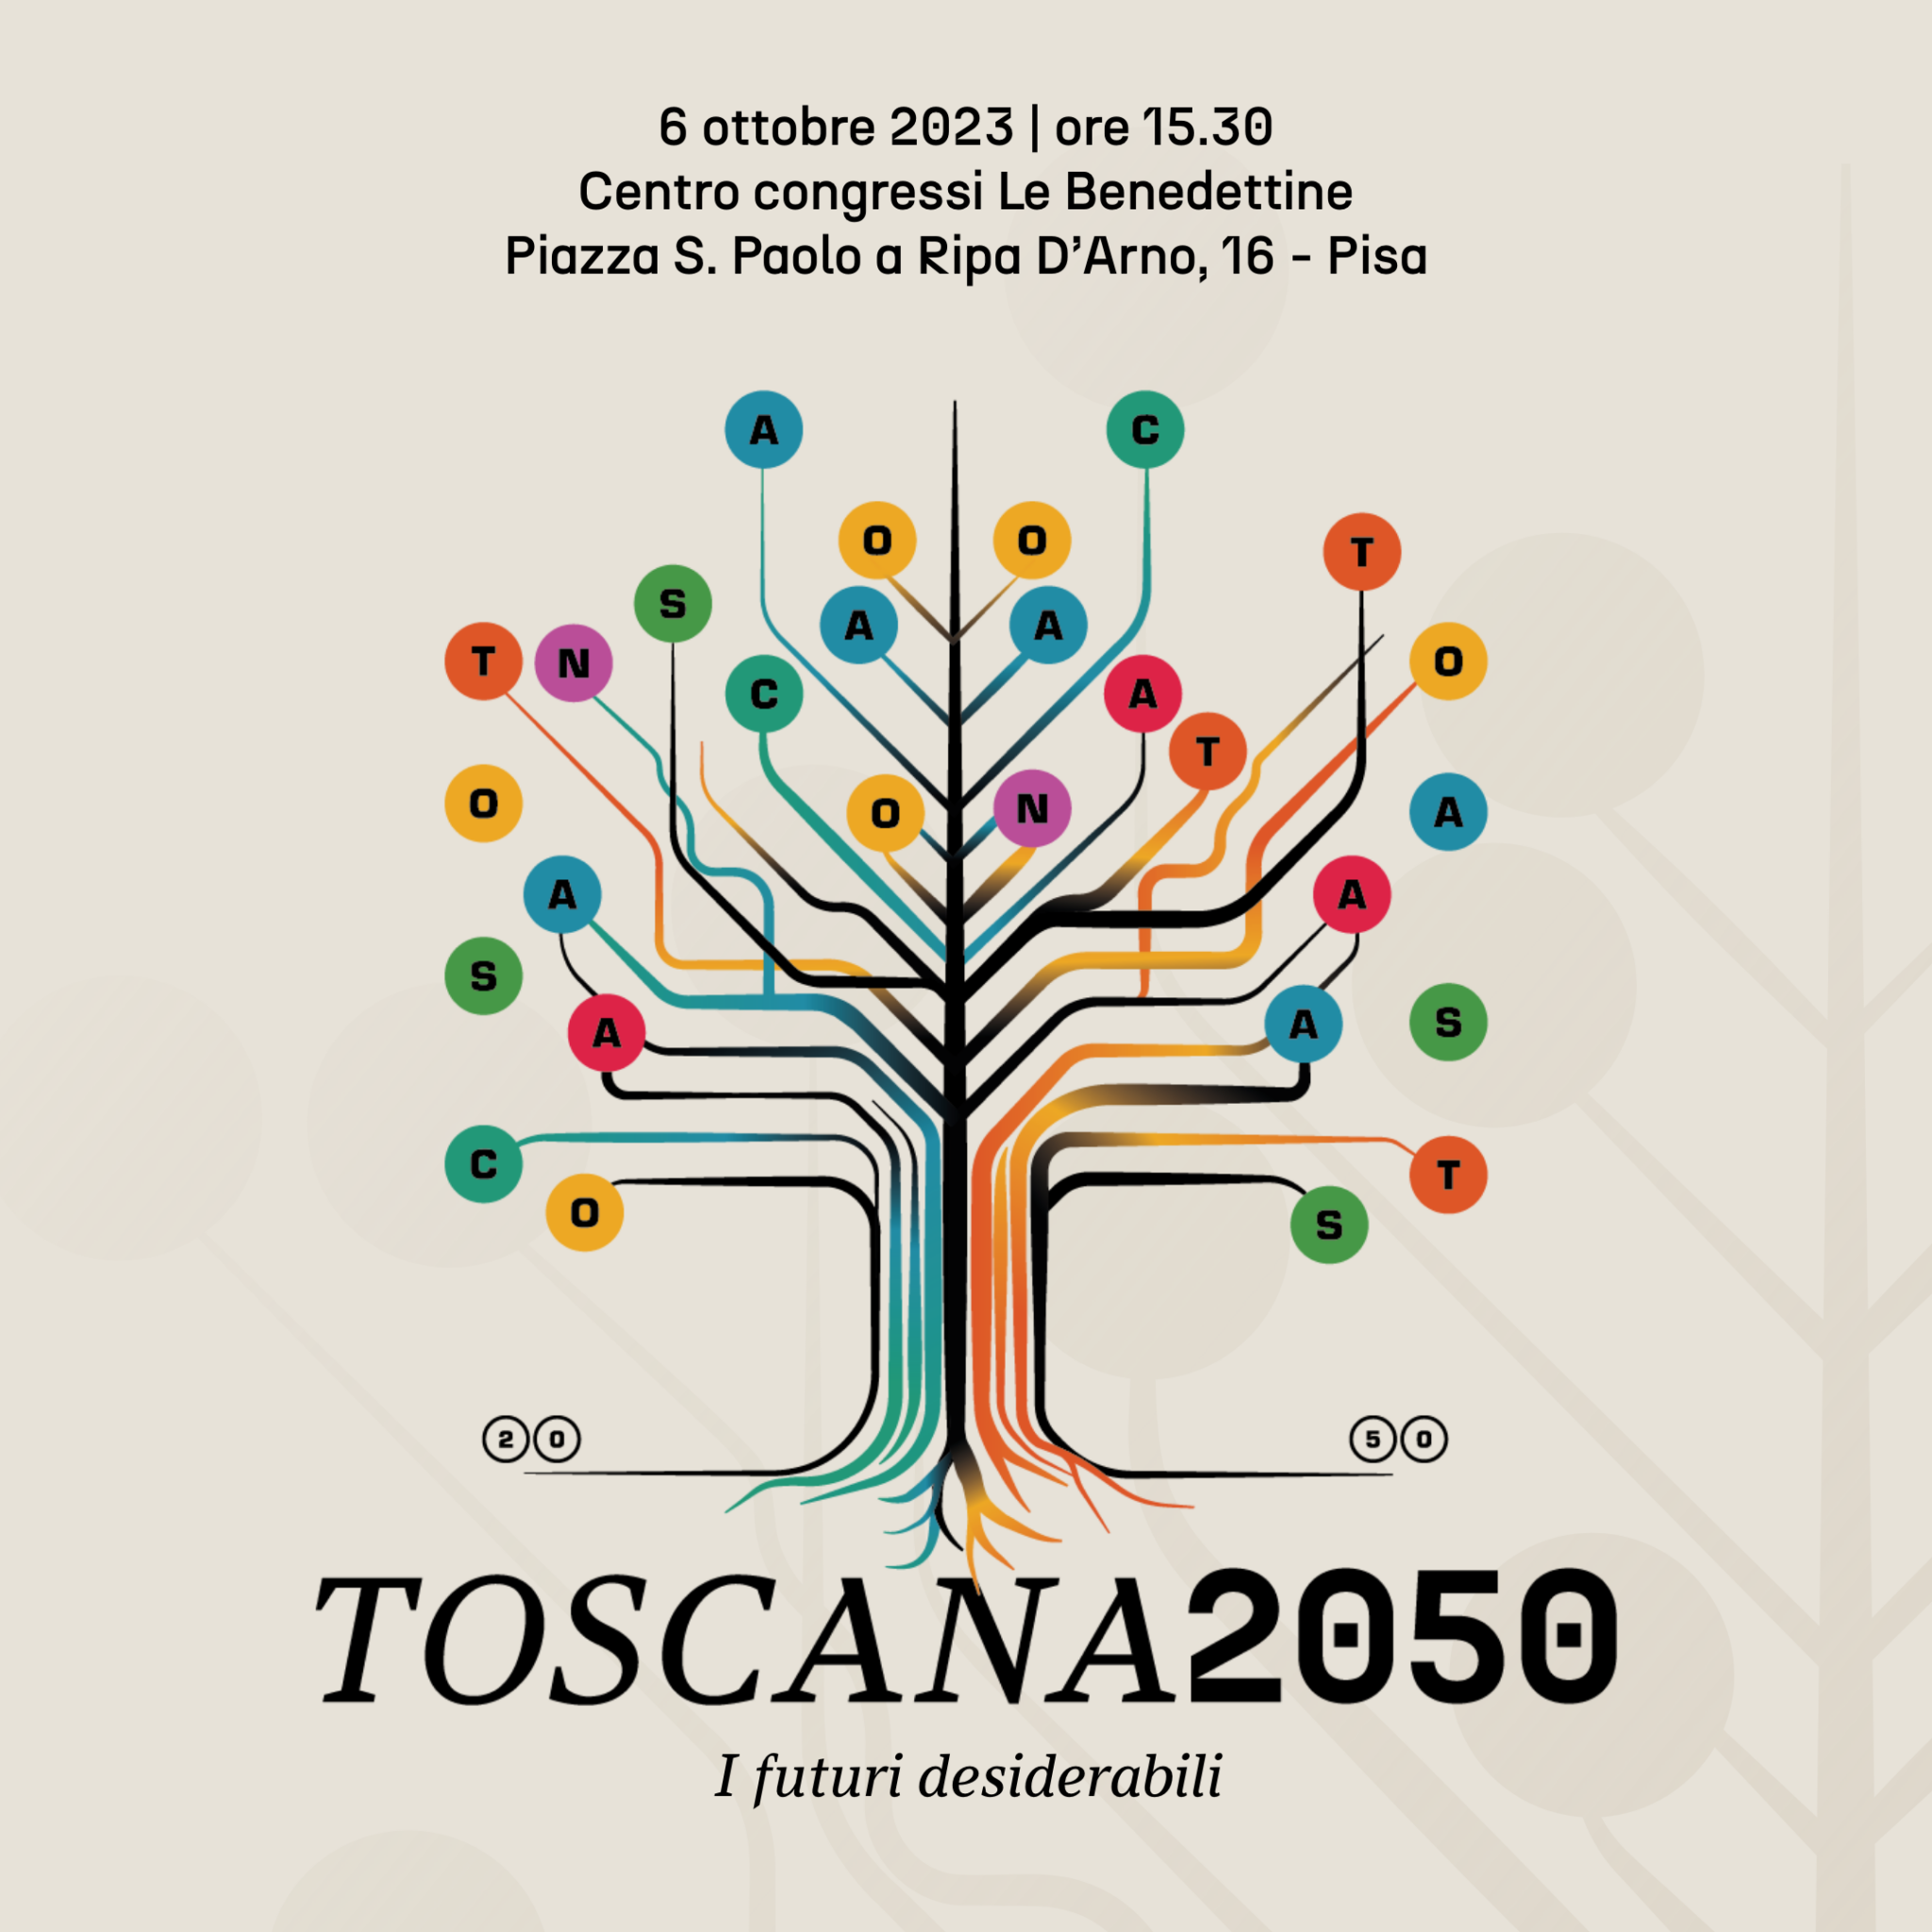 <strong>Toscana 2050: ‘I futuri desiderabili’ all’Internet Festival di Pisa</strong>